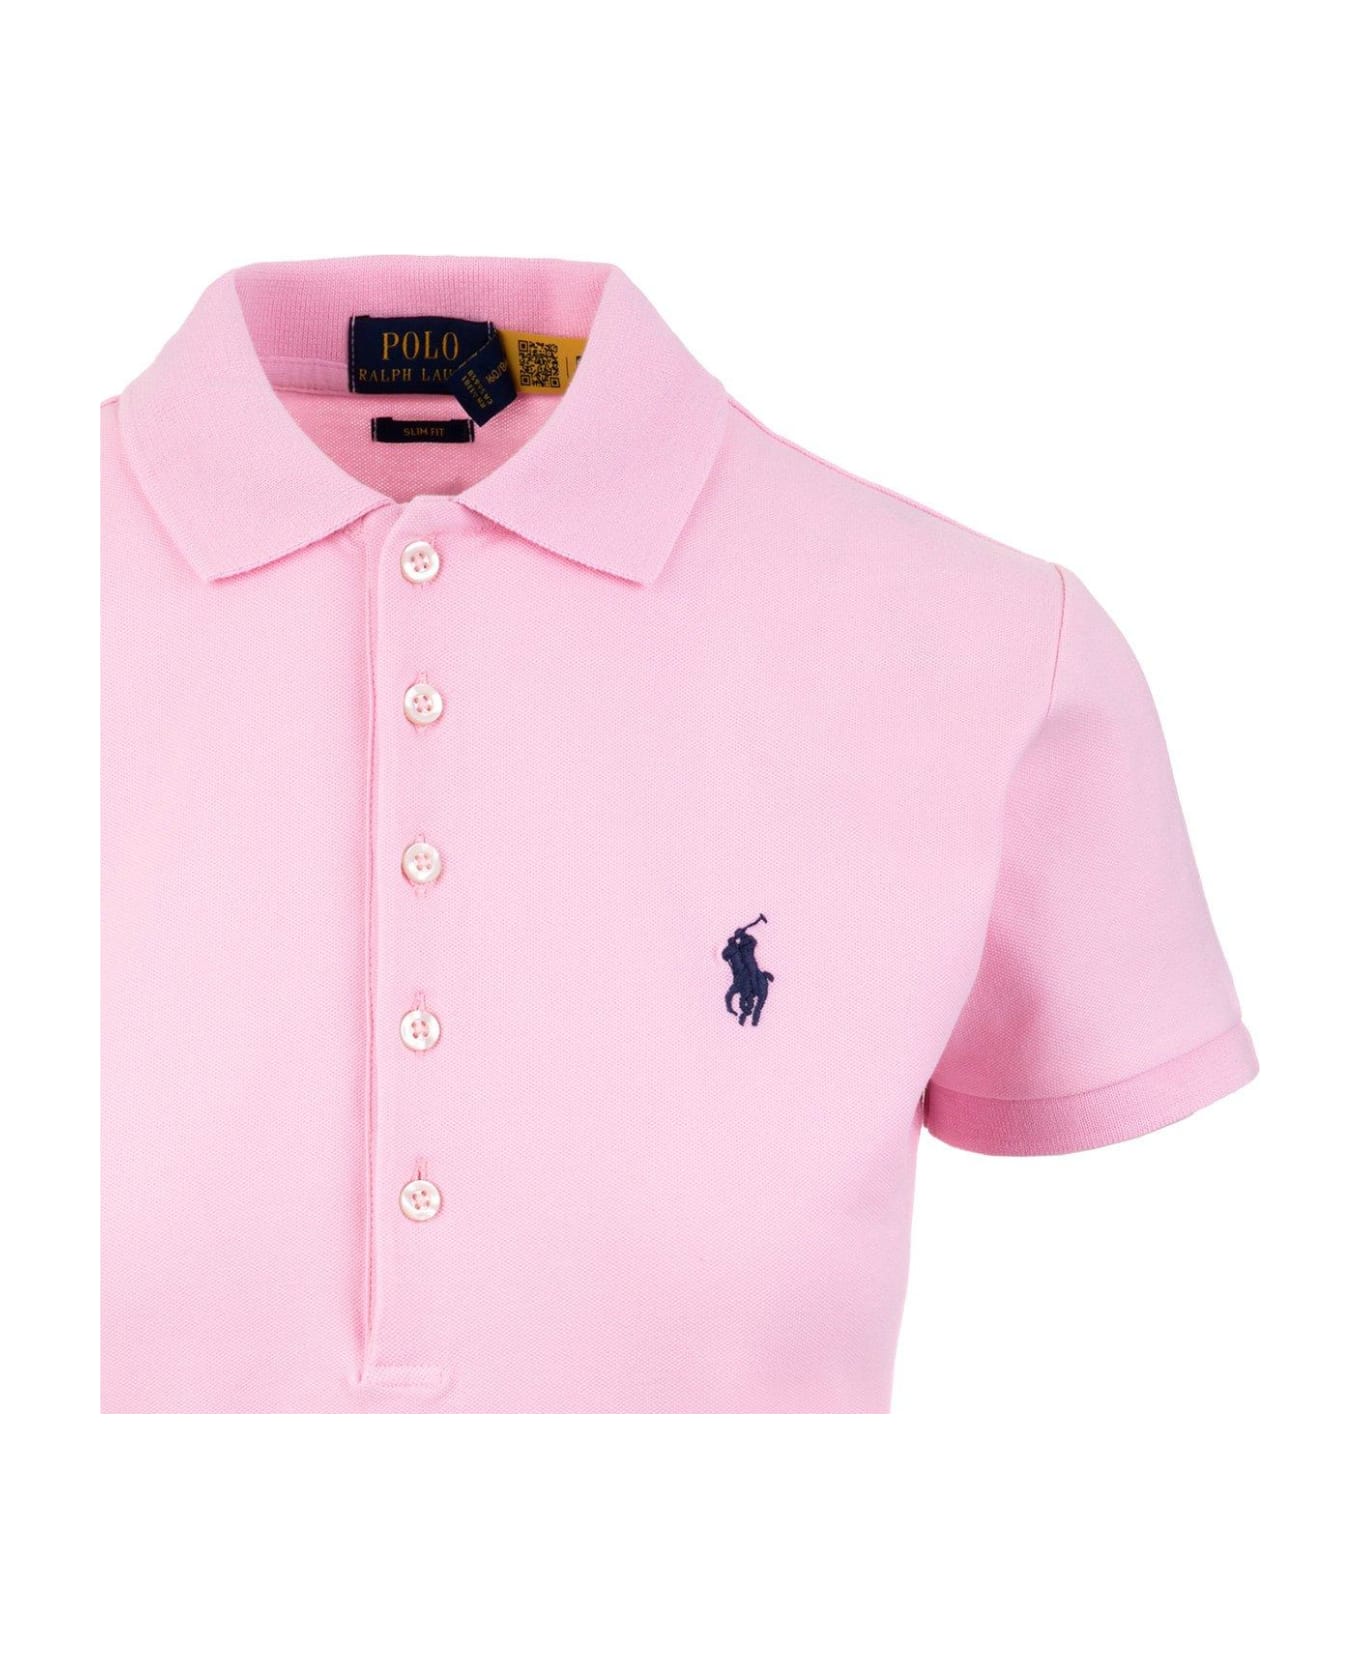 Ralph Lauren Logo Embroidered Polo Shirt - PINK